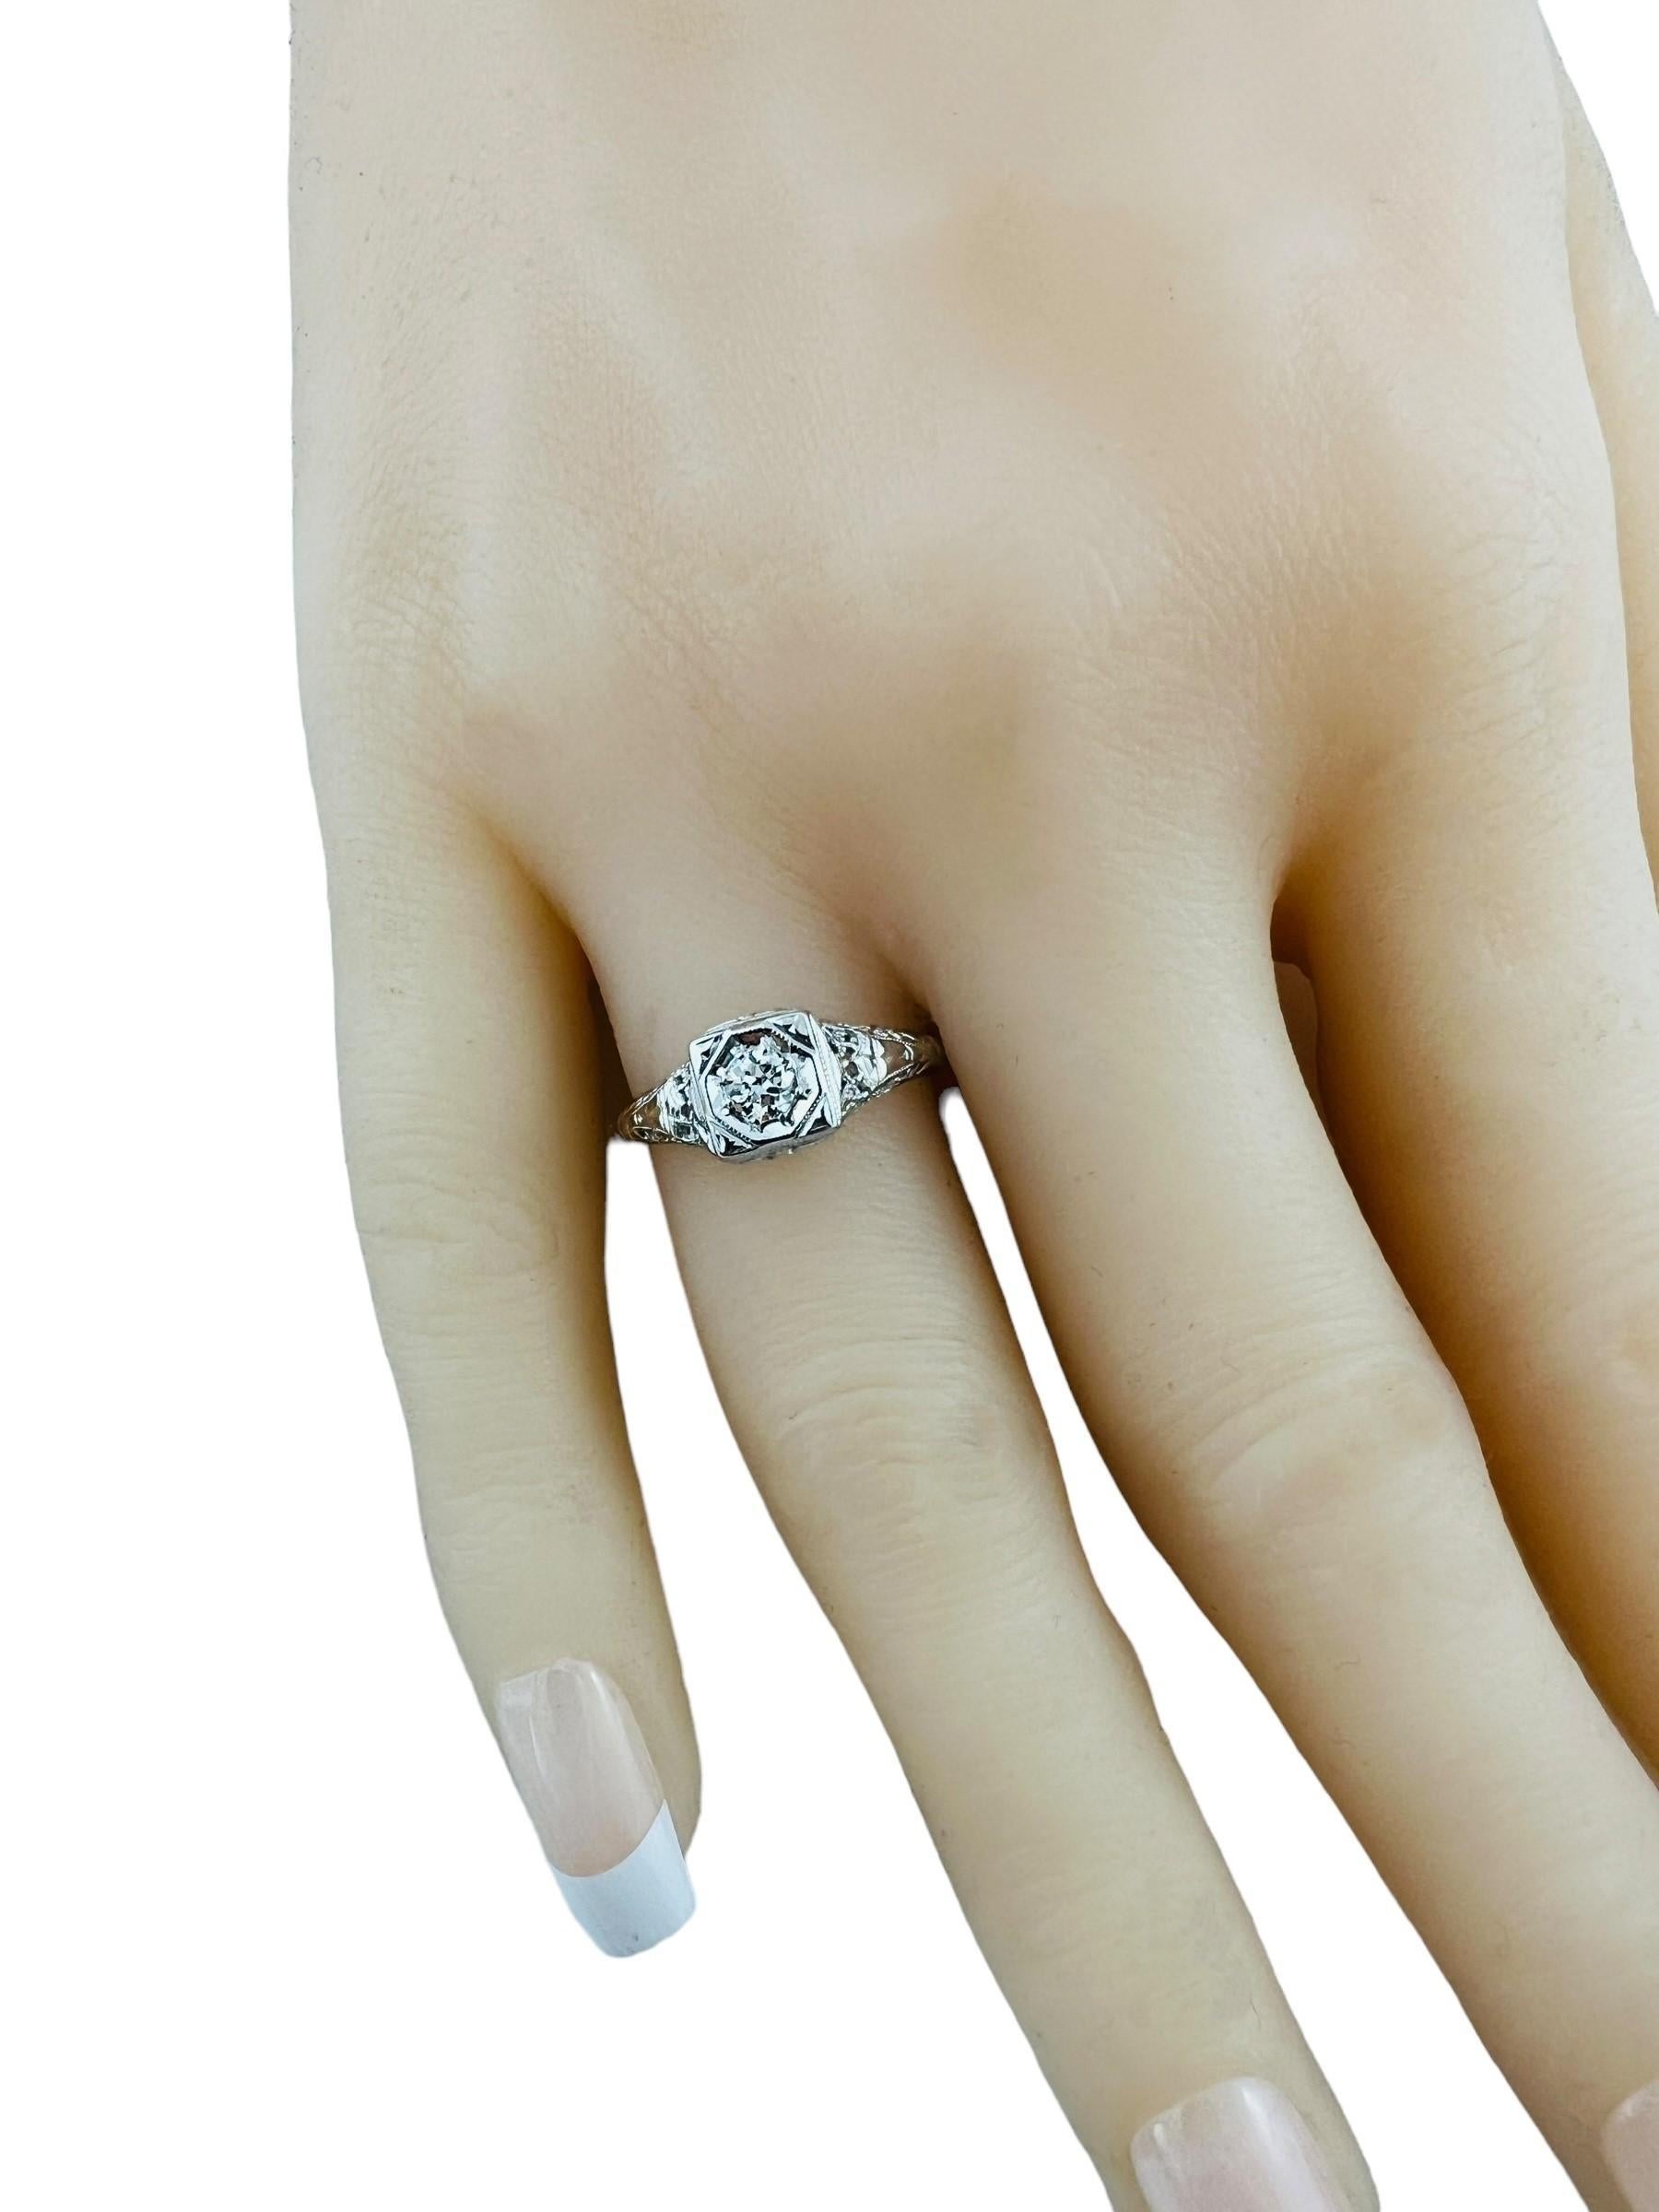 18K White Gold Filigree Diamond Ring Size 7 #16547 For Sale 3